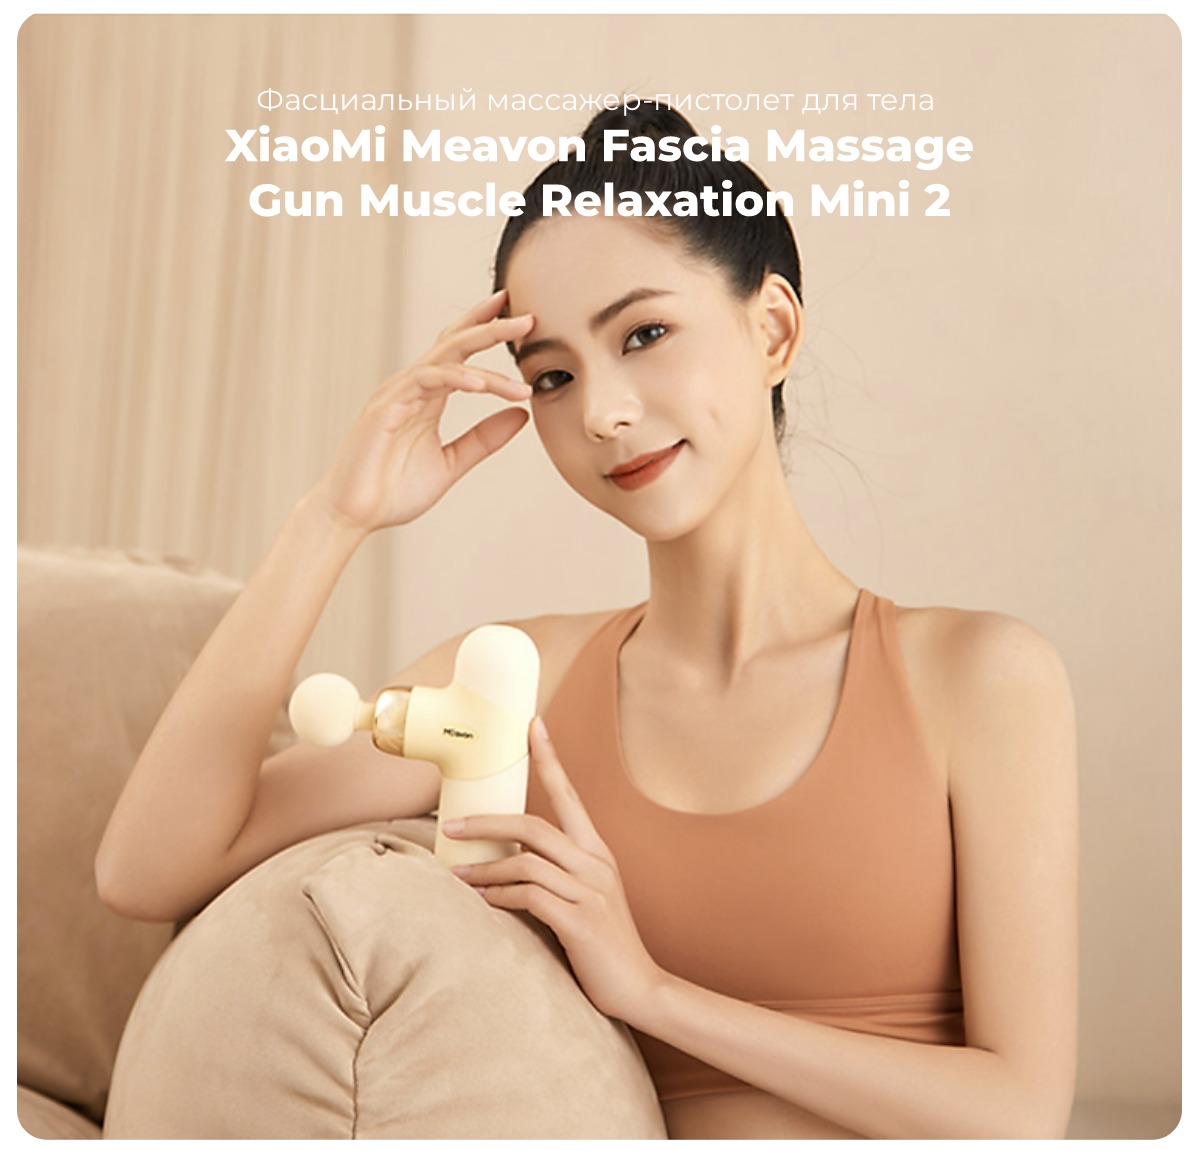 XiaoMi-Meavon-Fascia-Massage-Gun-Muscle-Relaxation-Mini-2-MVFG-M351-01